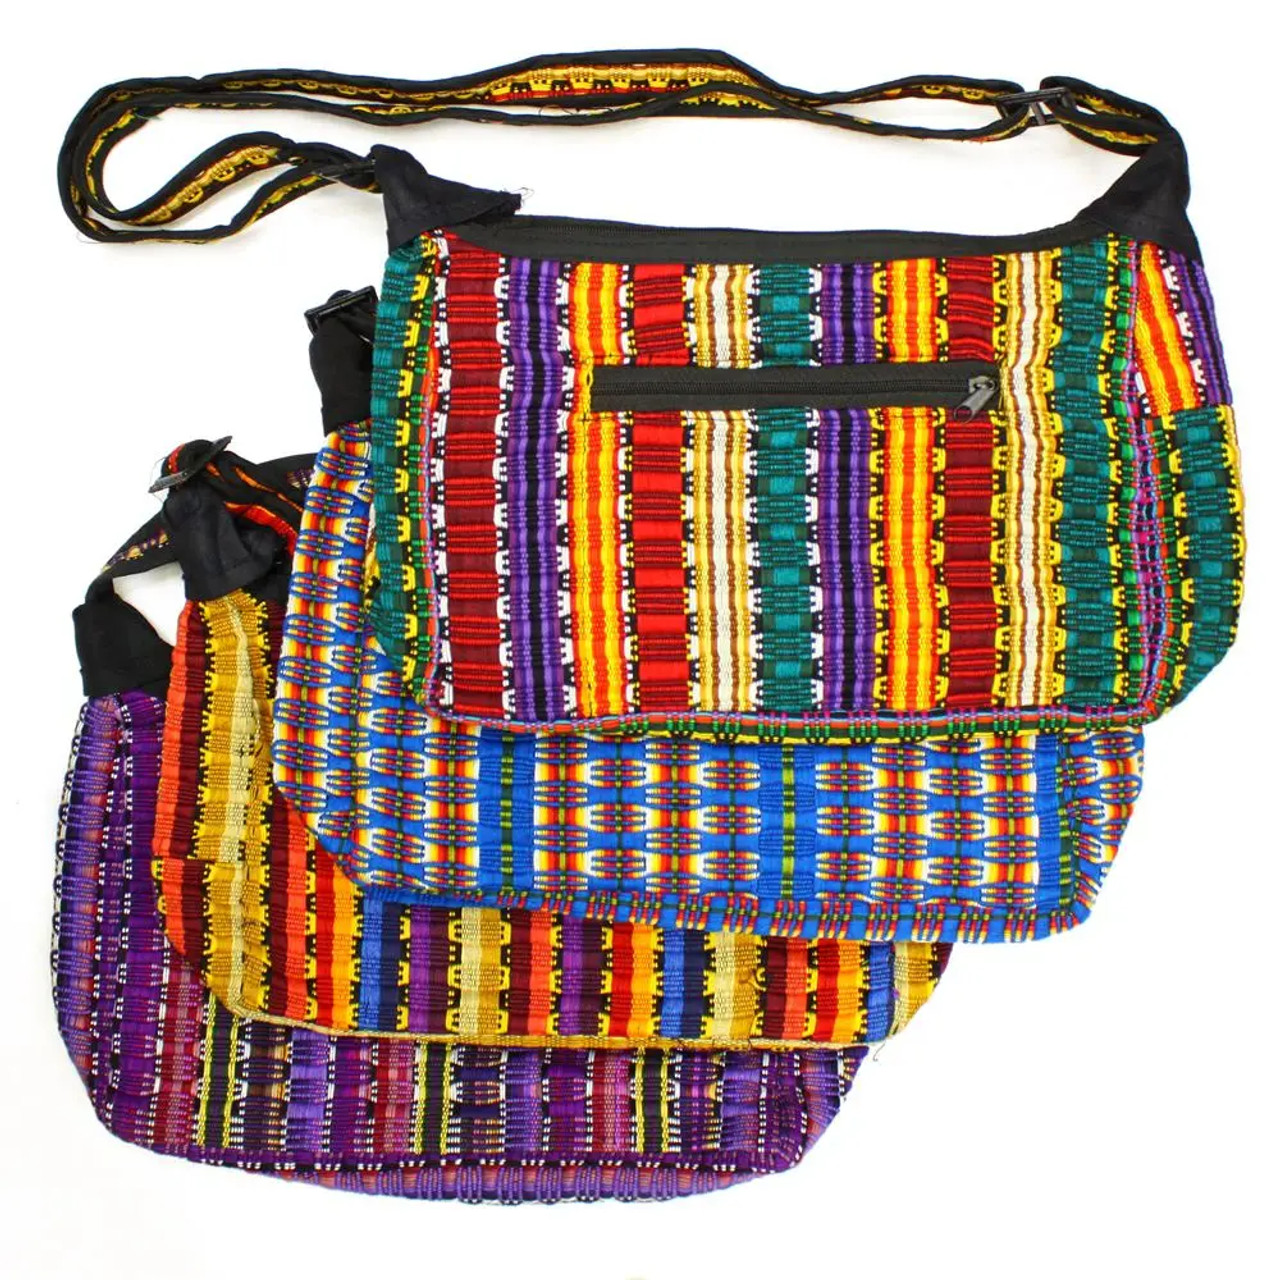 Mexican Artesanal Handmade Knit Fabric Cross Body Purse, Colorful And Fun.  | eBay